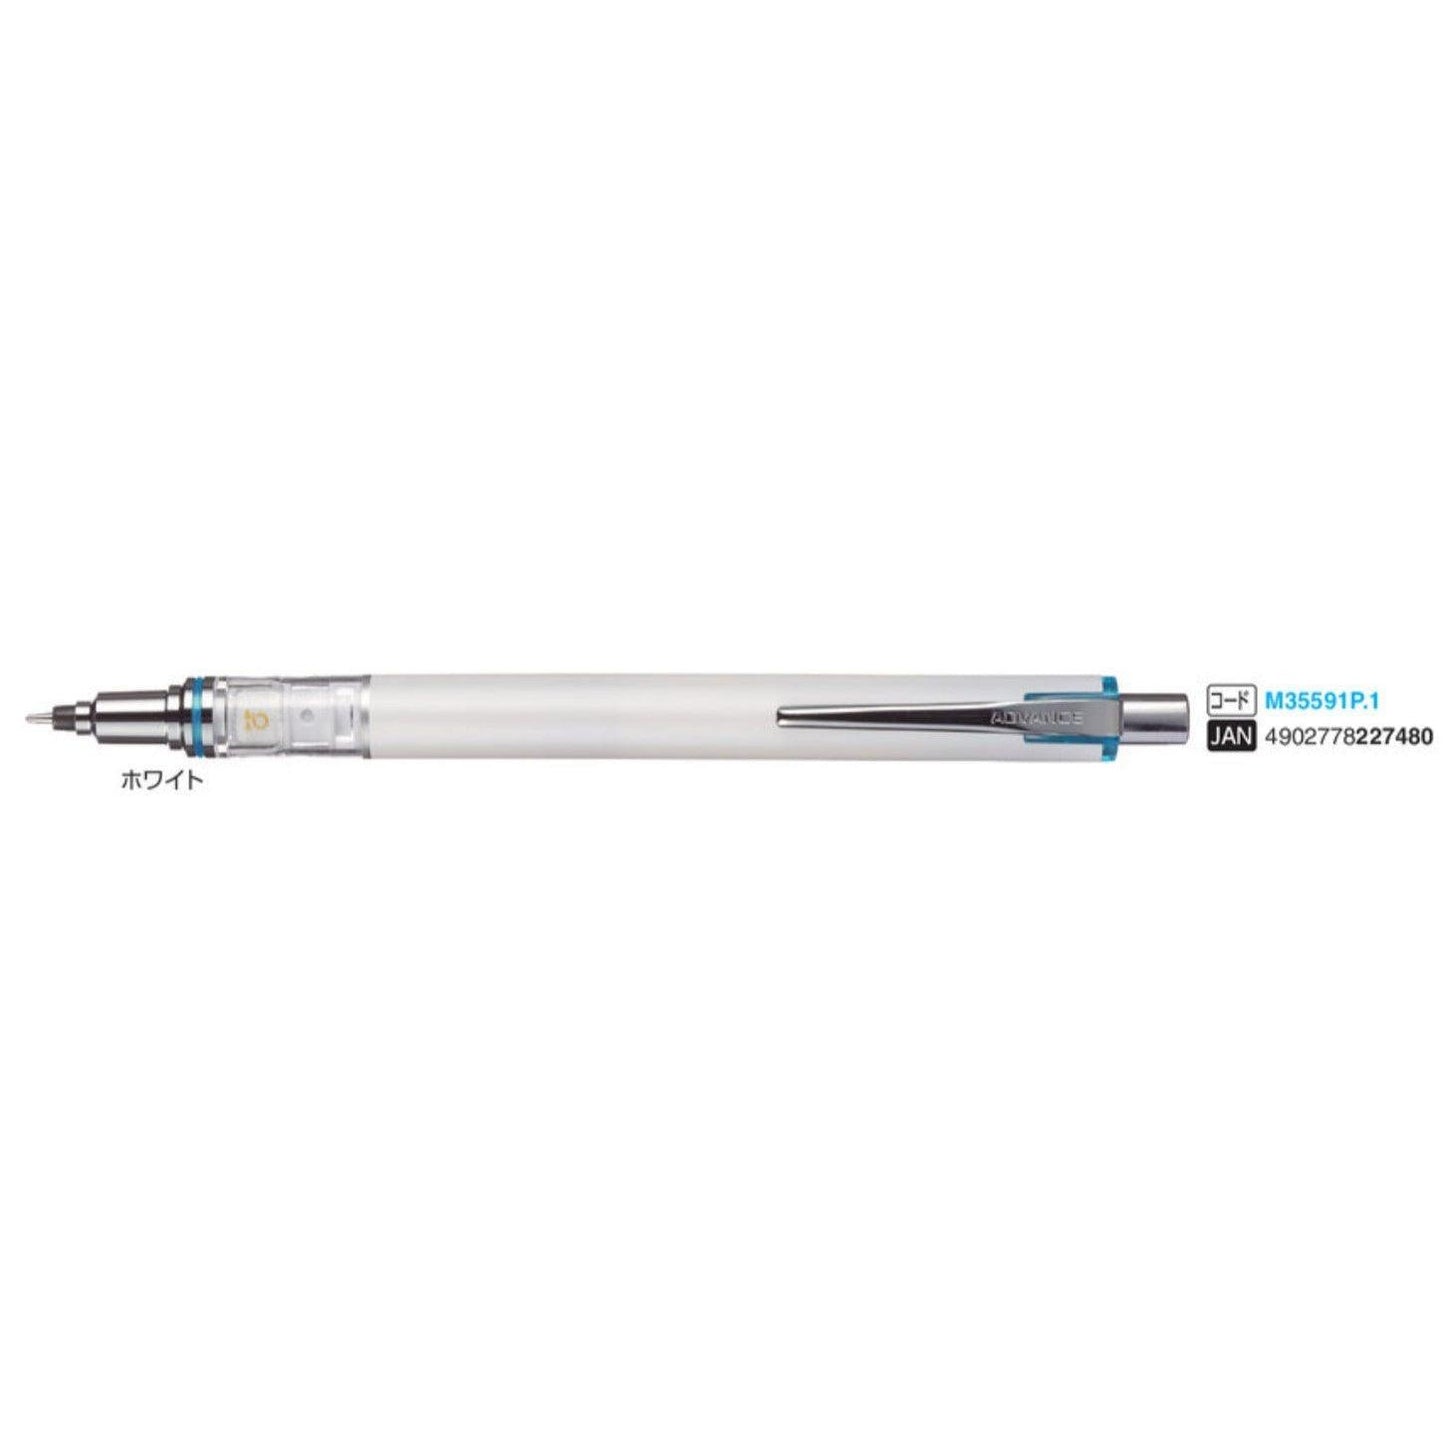 (Pre-Order) UNI KURU TOGA ADVANCE 0.3mm/0.5mm/0.7mm mechanical pencil, M3-559, M7-559, M5-559 - CHL-STORE 